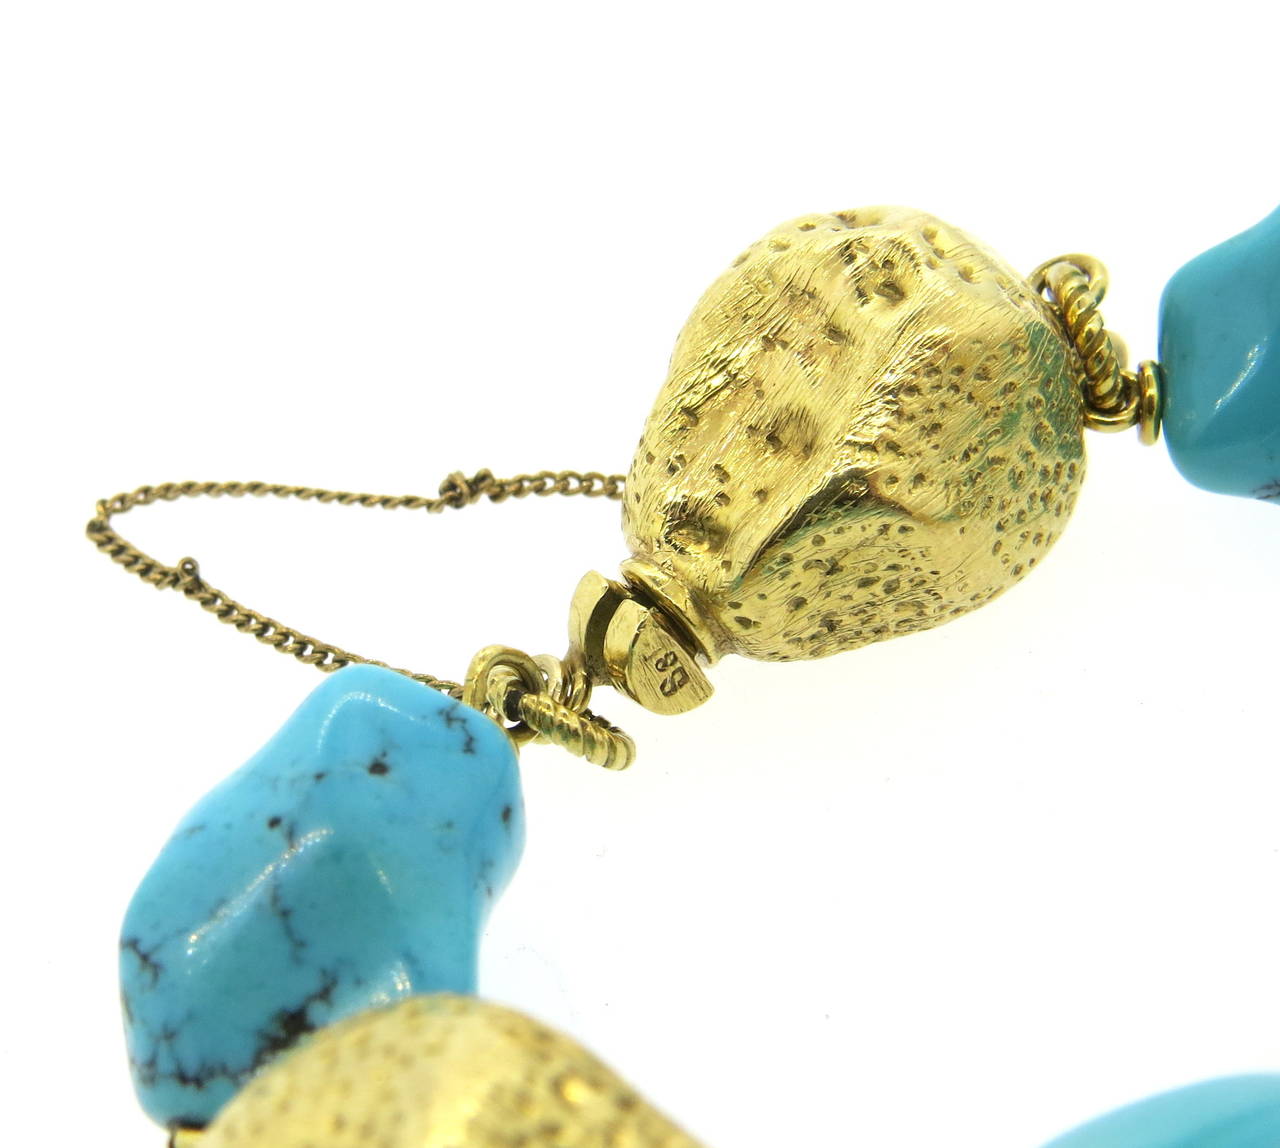 Spritzer & Furman 18k yellow gold bracelet, set with four turquoise stations. Bracelet is 8 1/2